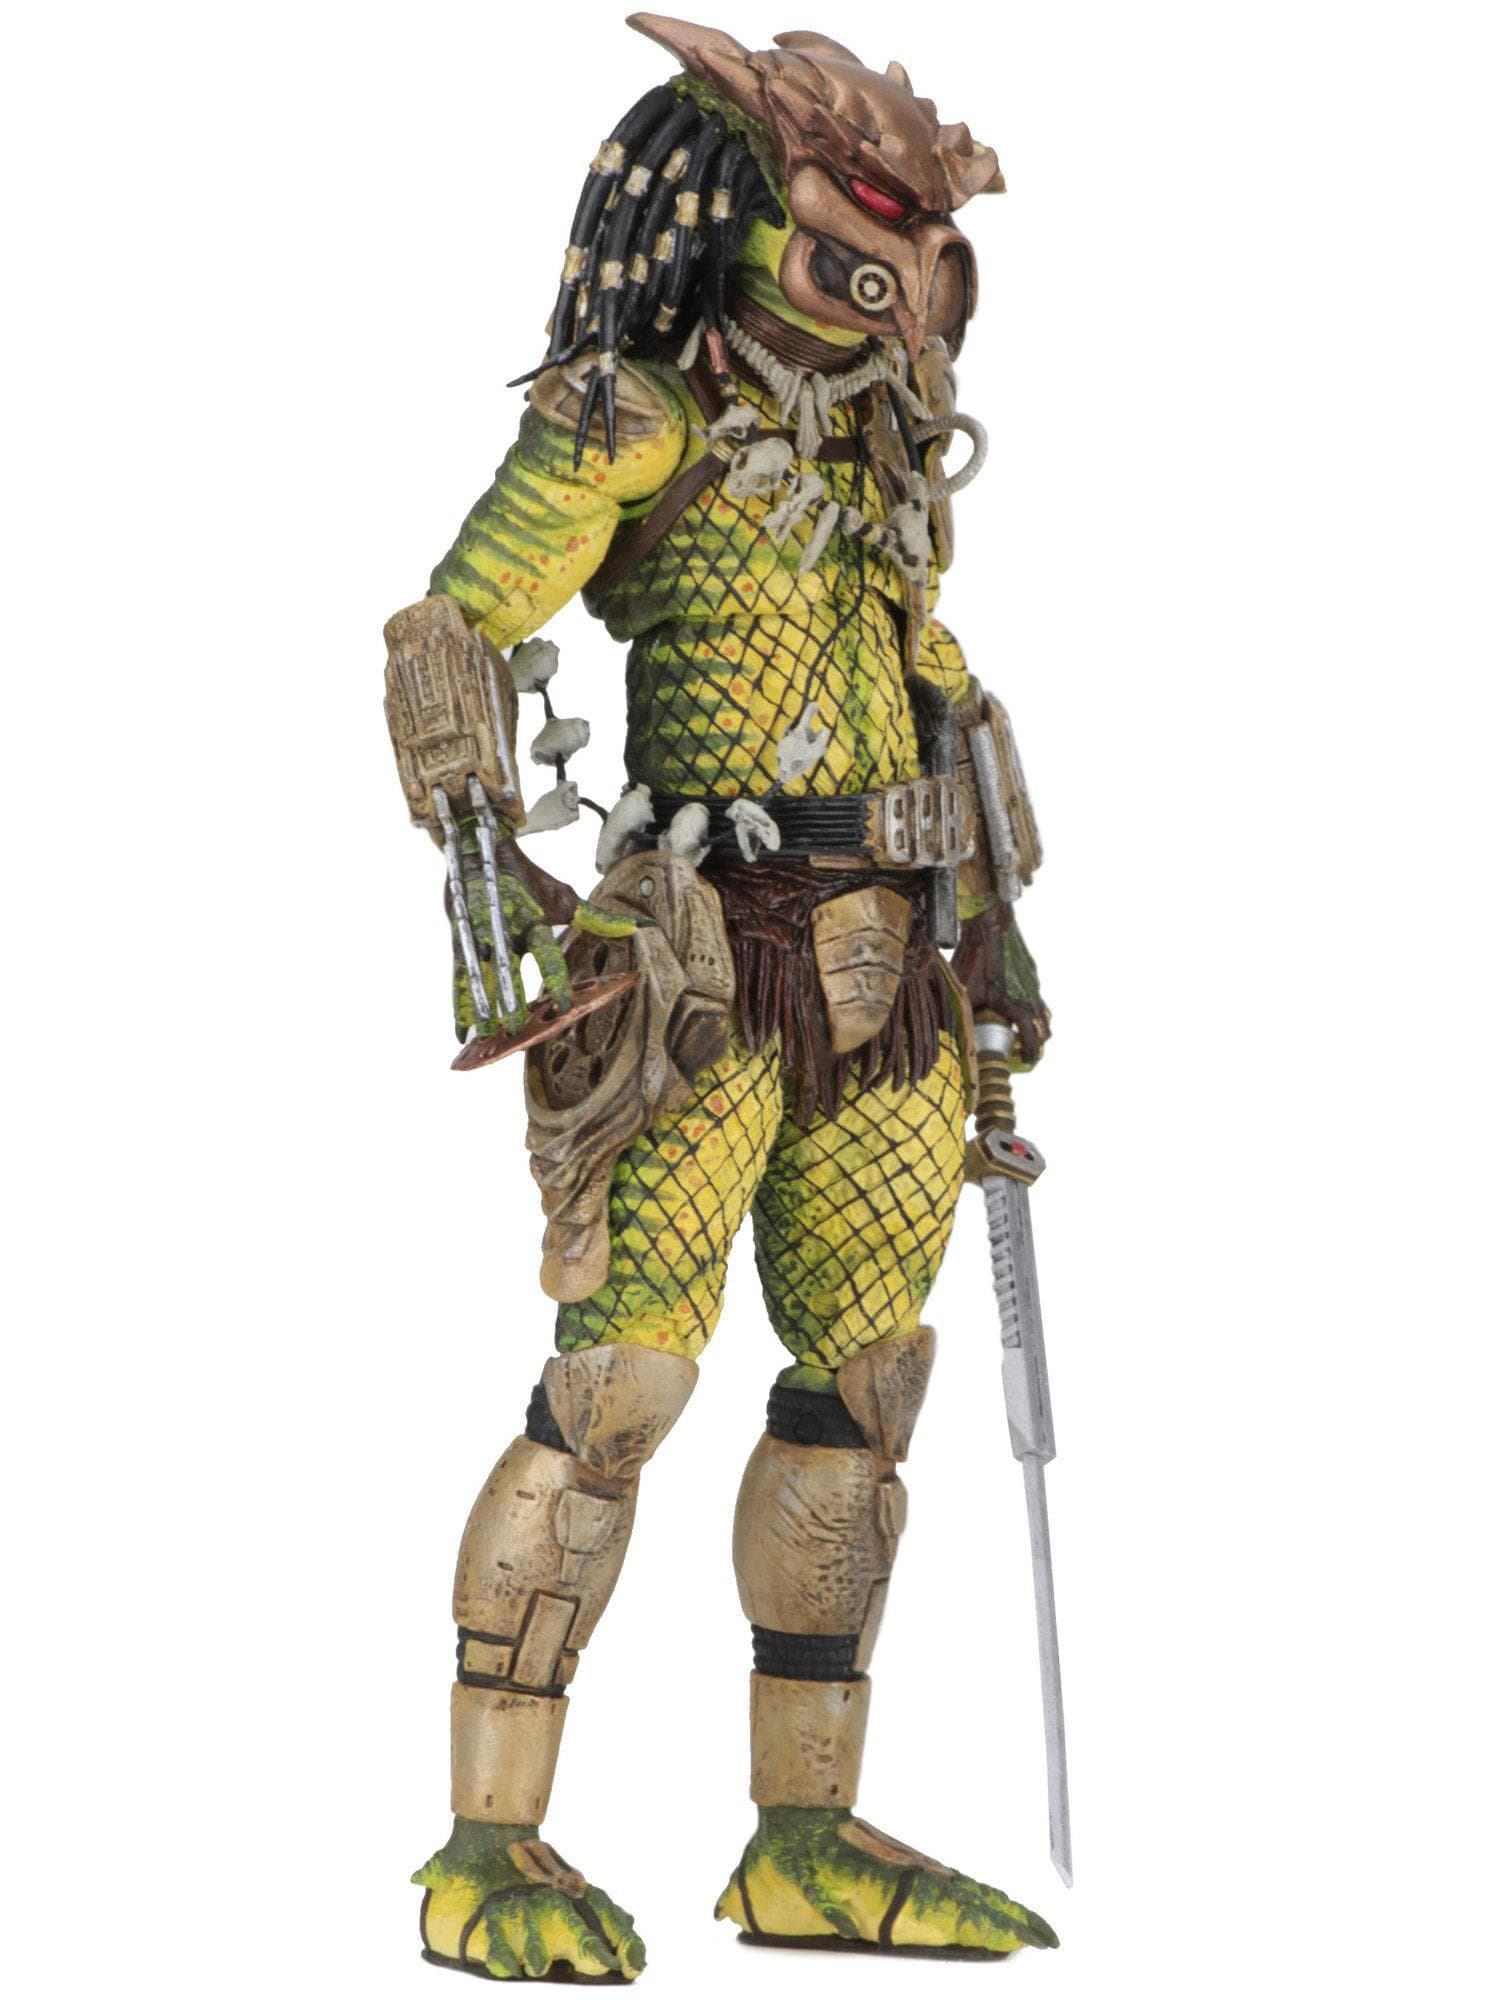 NECA - Predator 2 - 7" Scale Action Figure - Ultimate Elder: The Golden Angel - costumes.com